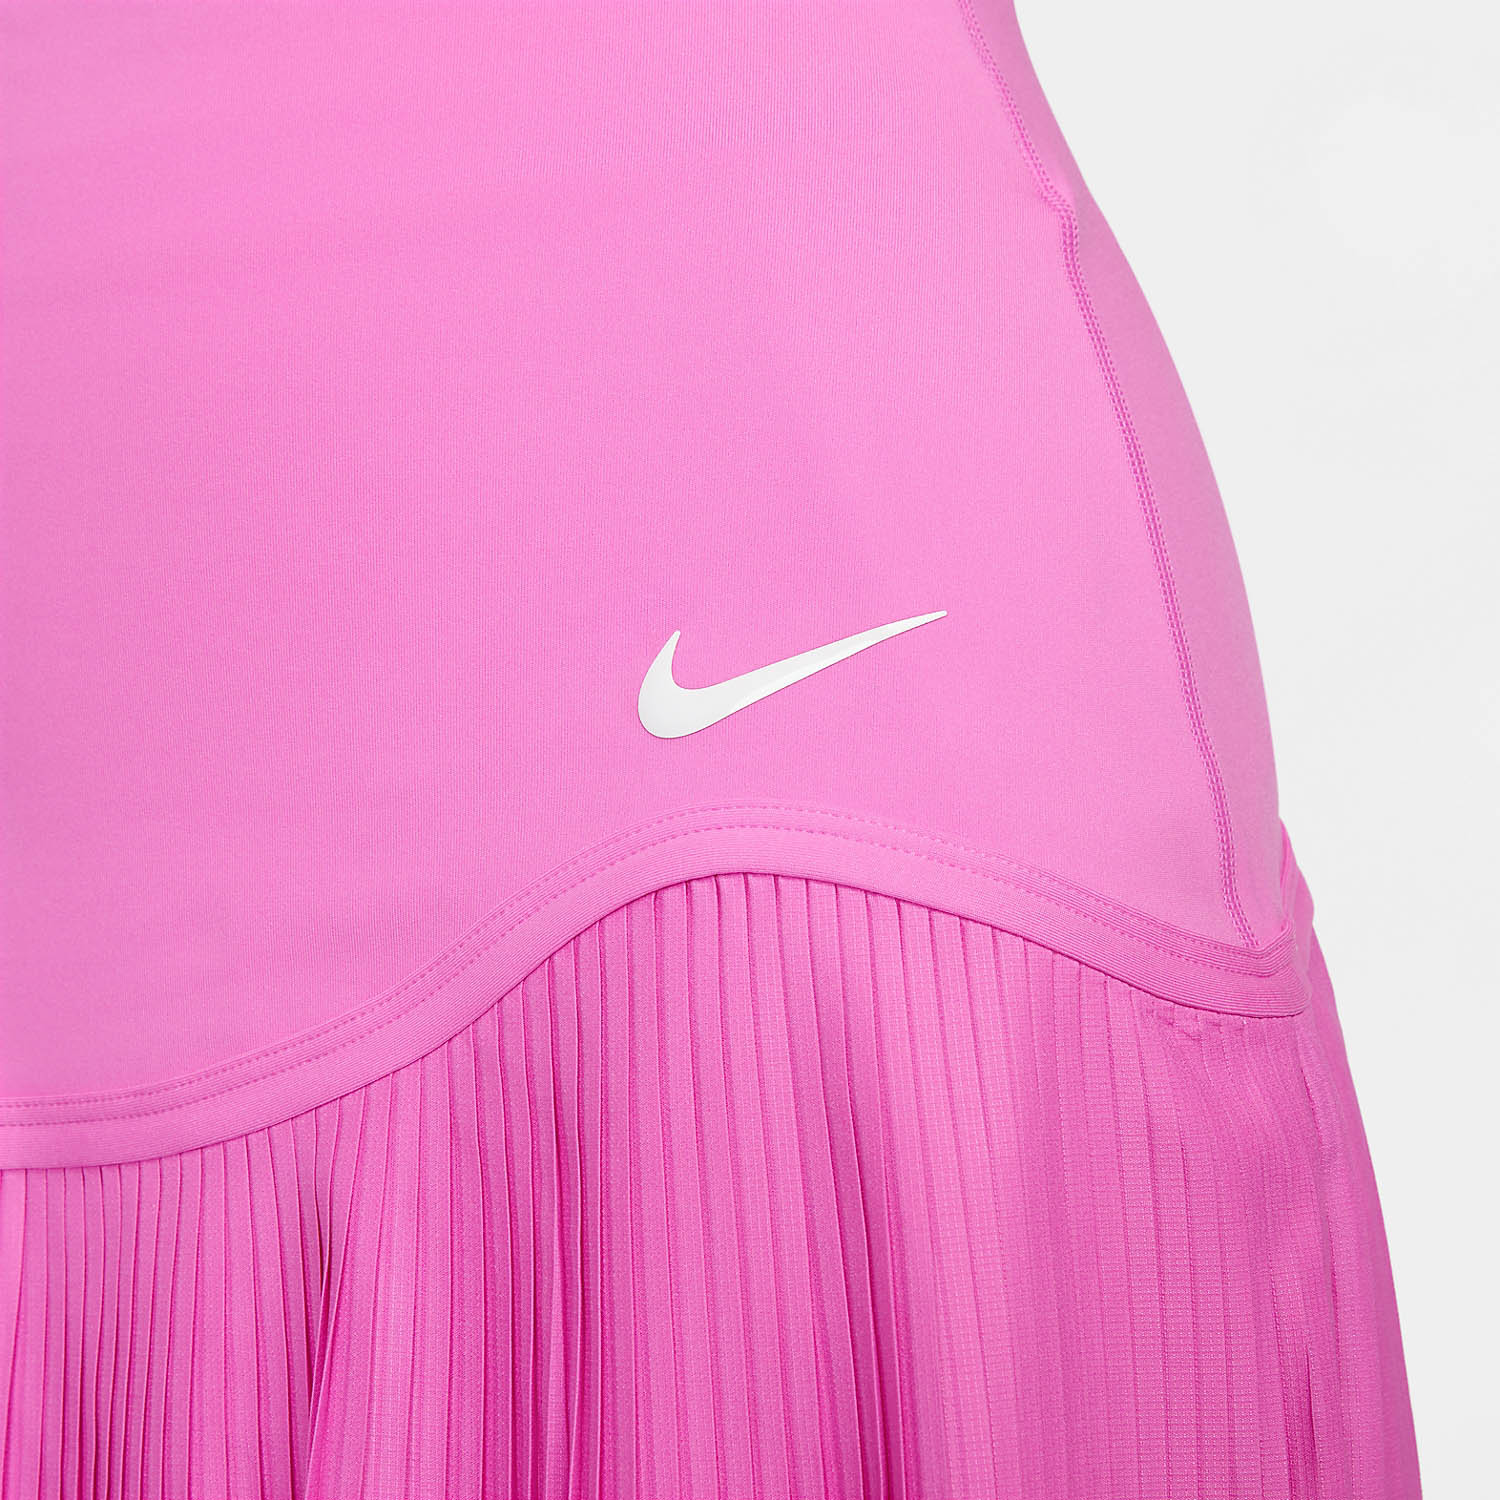 Nike Advantage Skirt - Playful Pink/Black